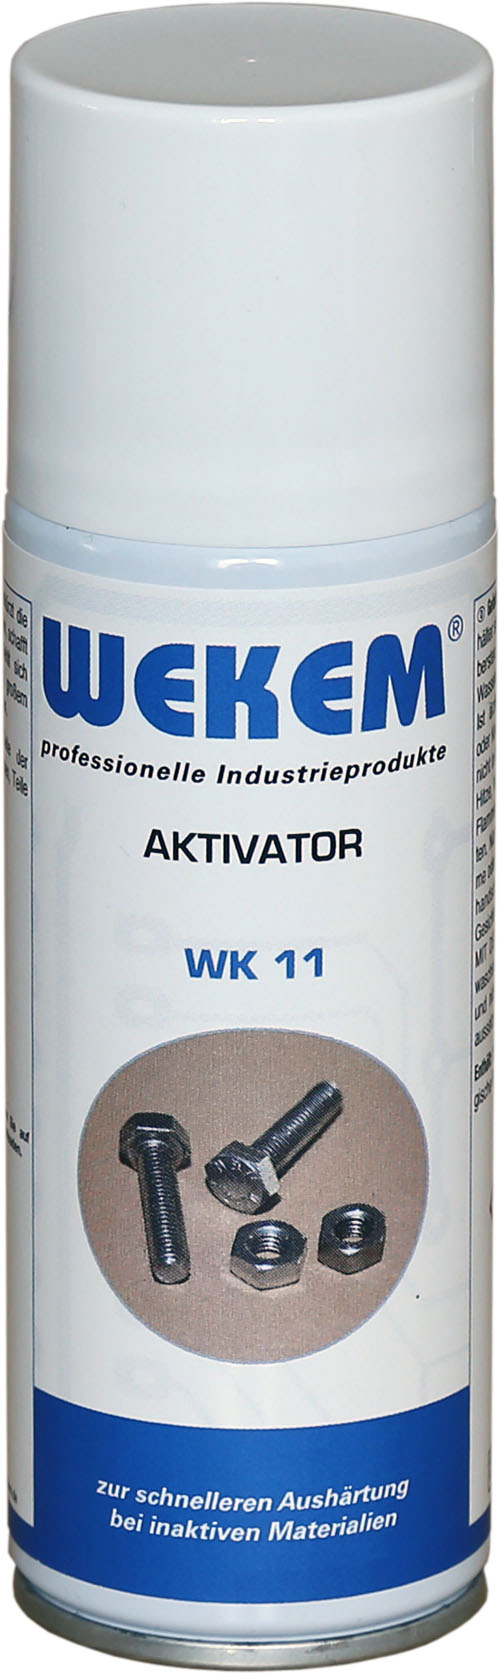 Aktivator anaerob WK 11